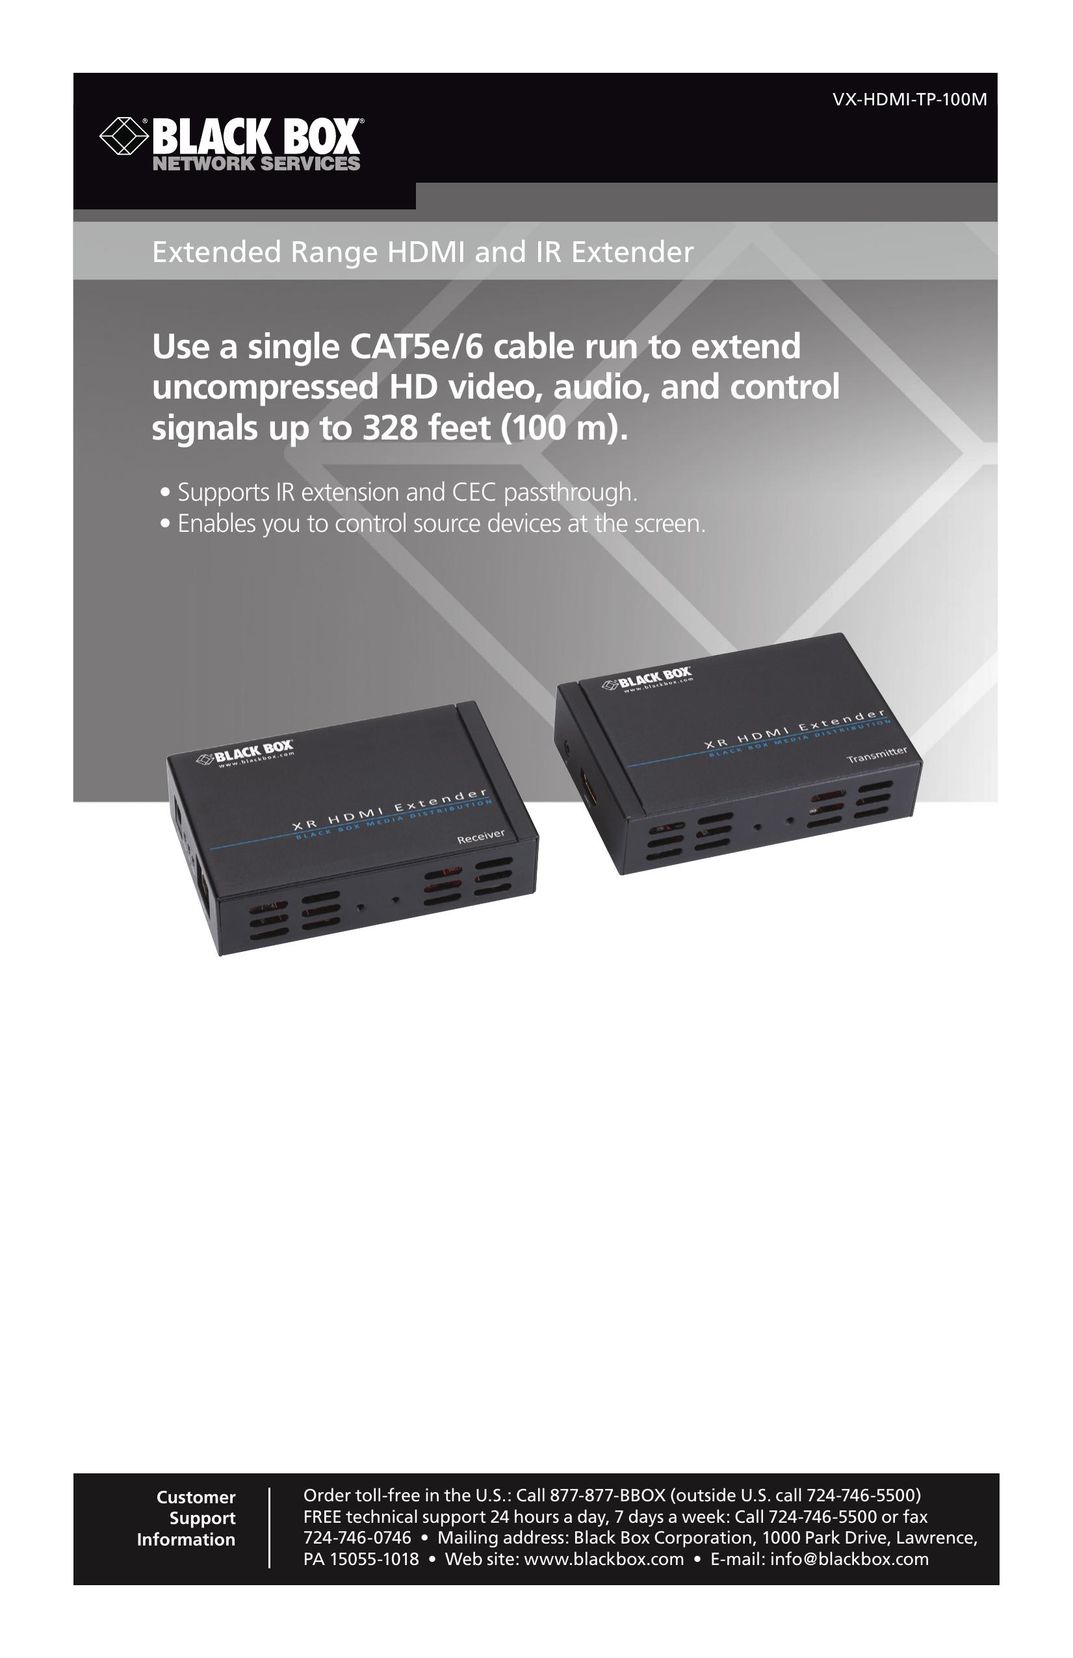 Black Box Extended Range HDMI and RI Extender Computer Hardware User Manual